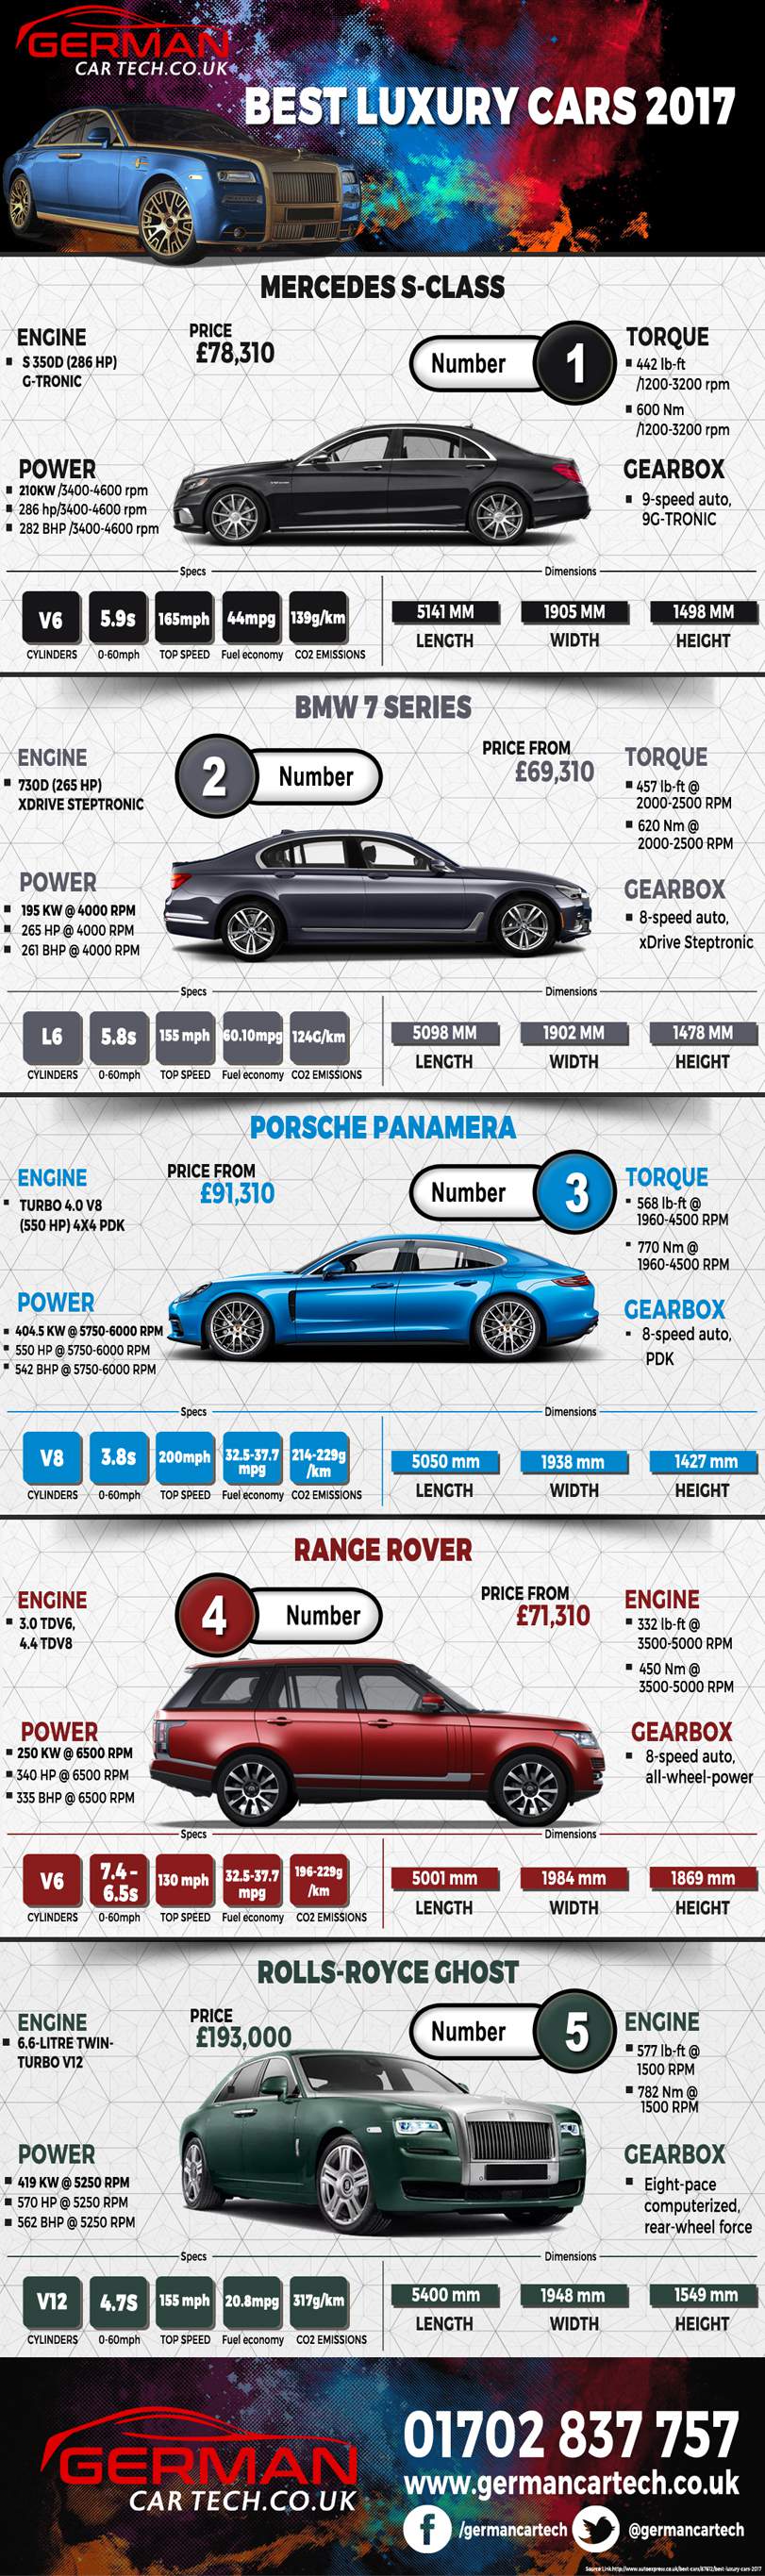 Best luxury cars 2017 - Infographic Portal